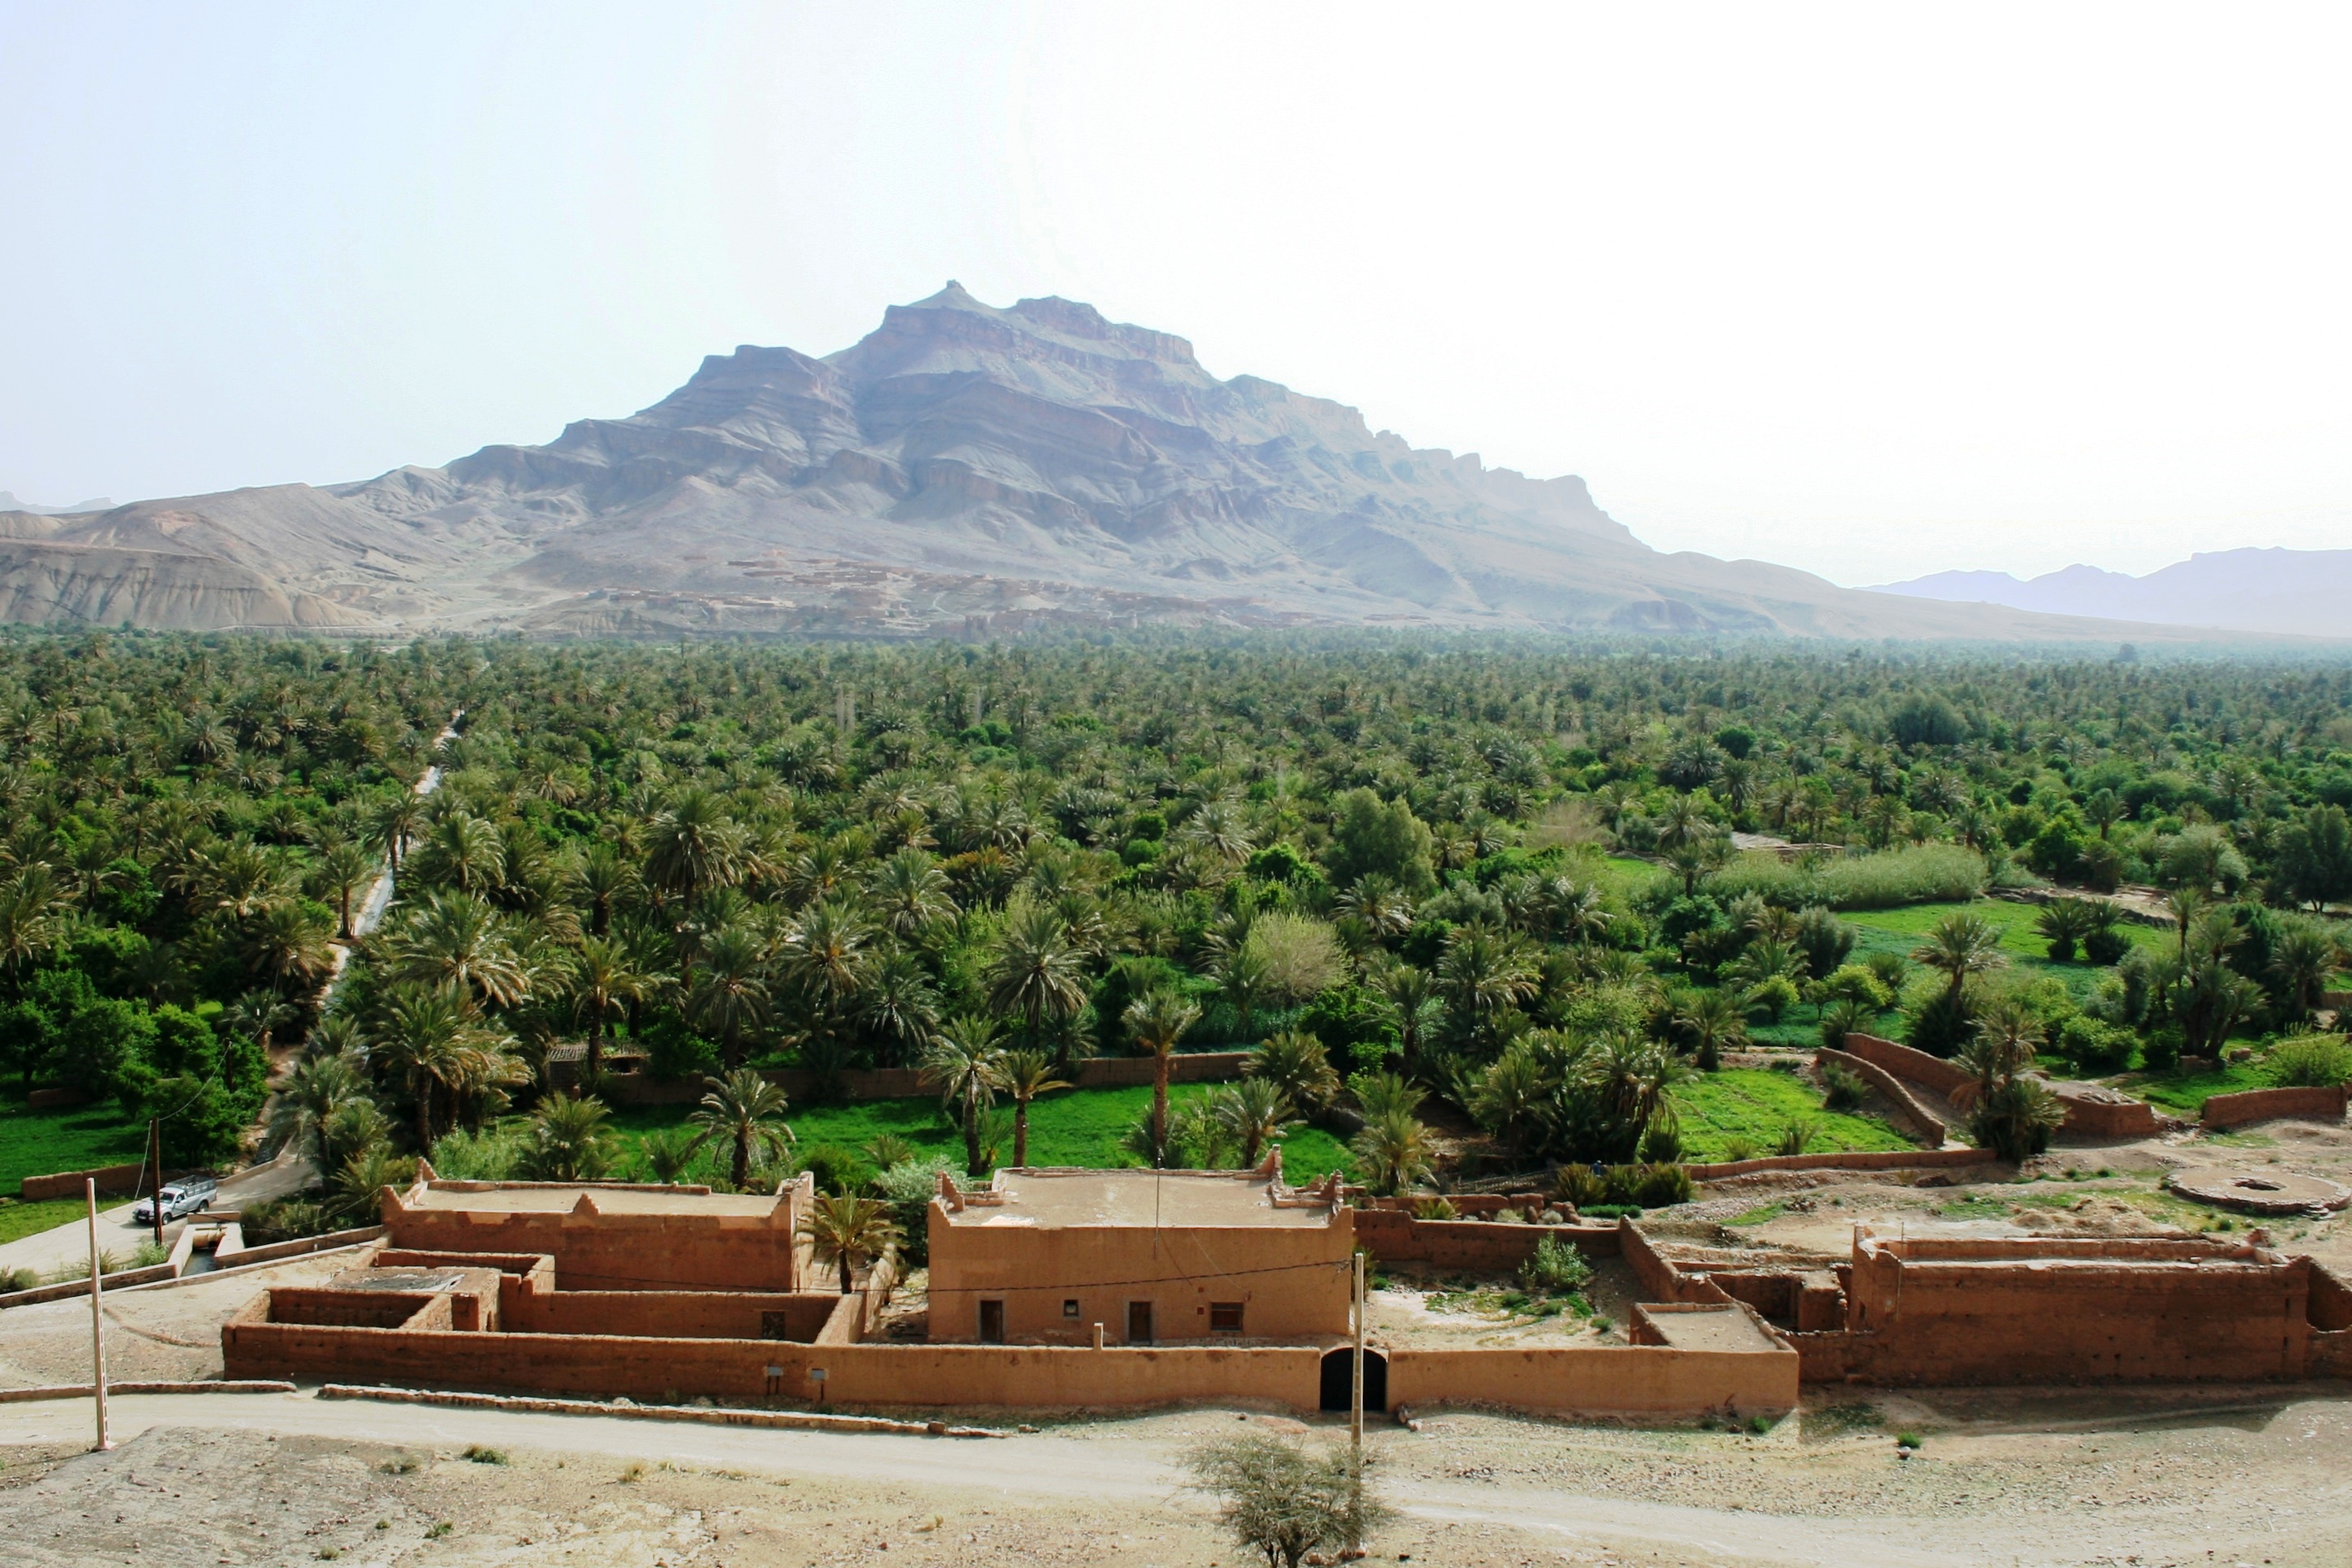 04 days Morocco desert tour to Erg Chegaga dunes from Marrakech